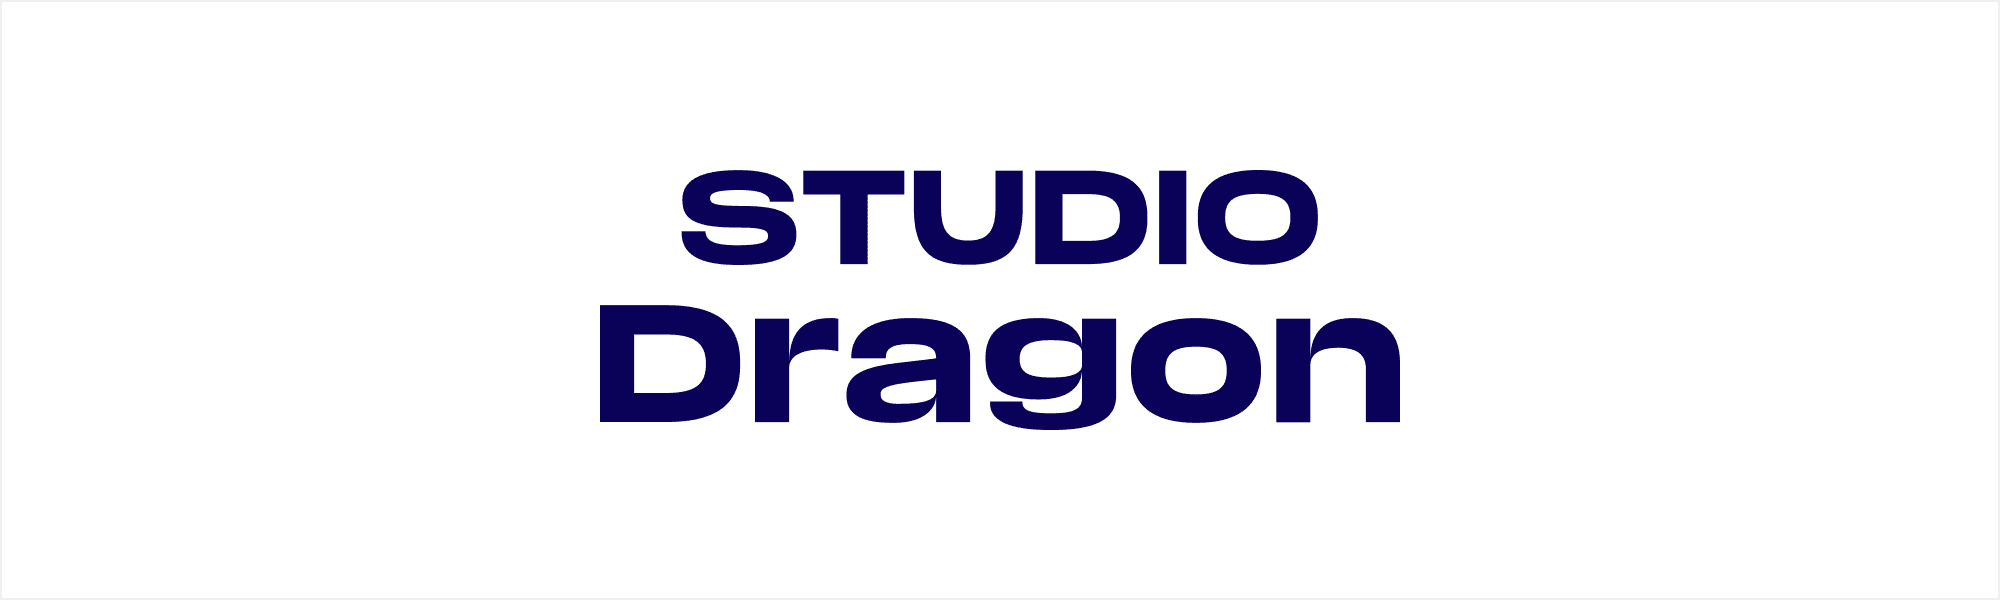 studiodragon Logo